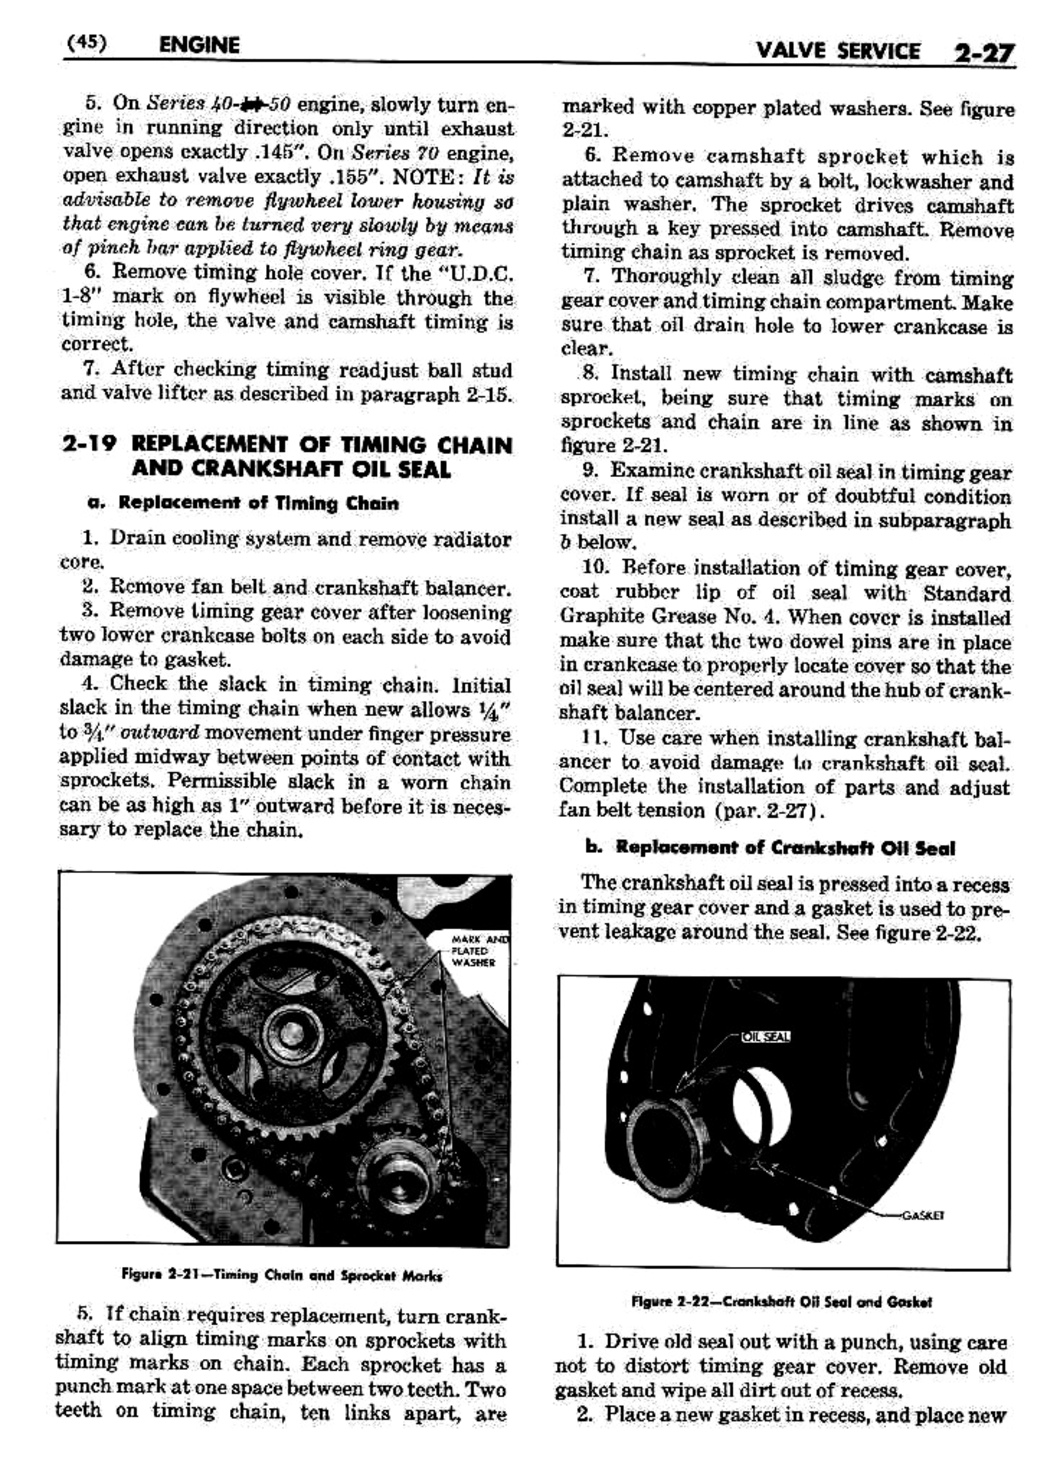 n_03 1951 Buick Shop Manual - Engine-027-027.jpg